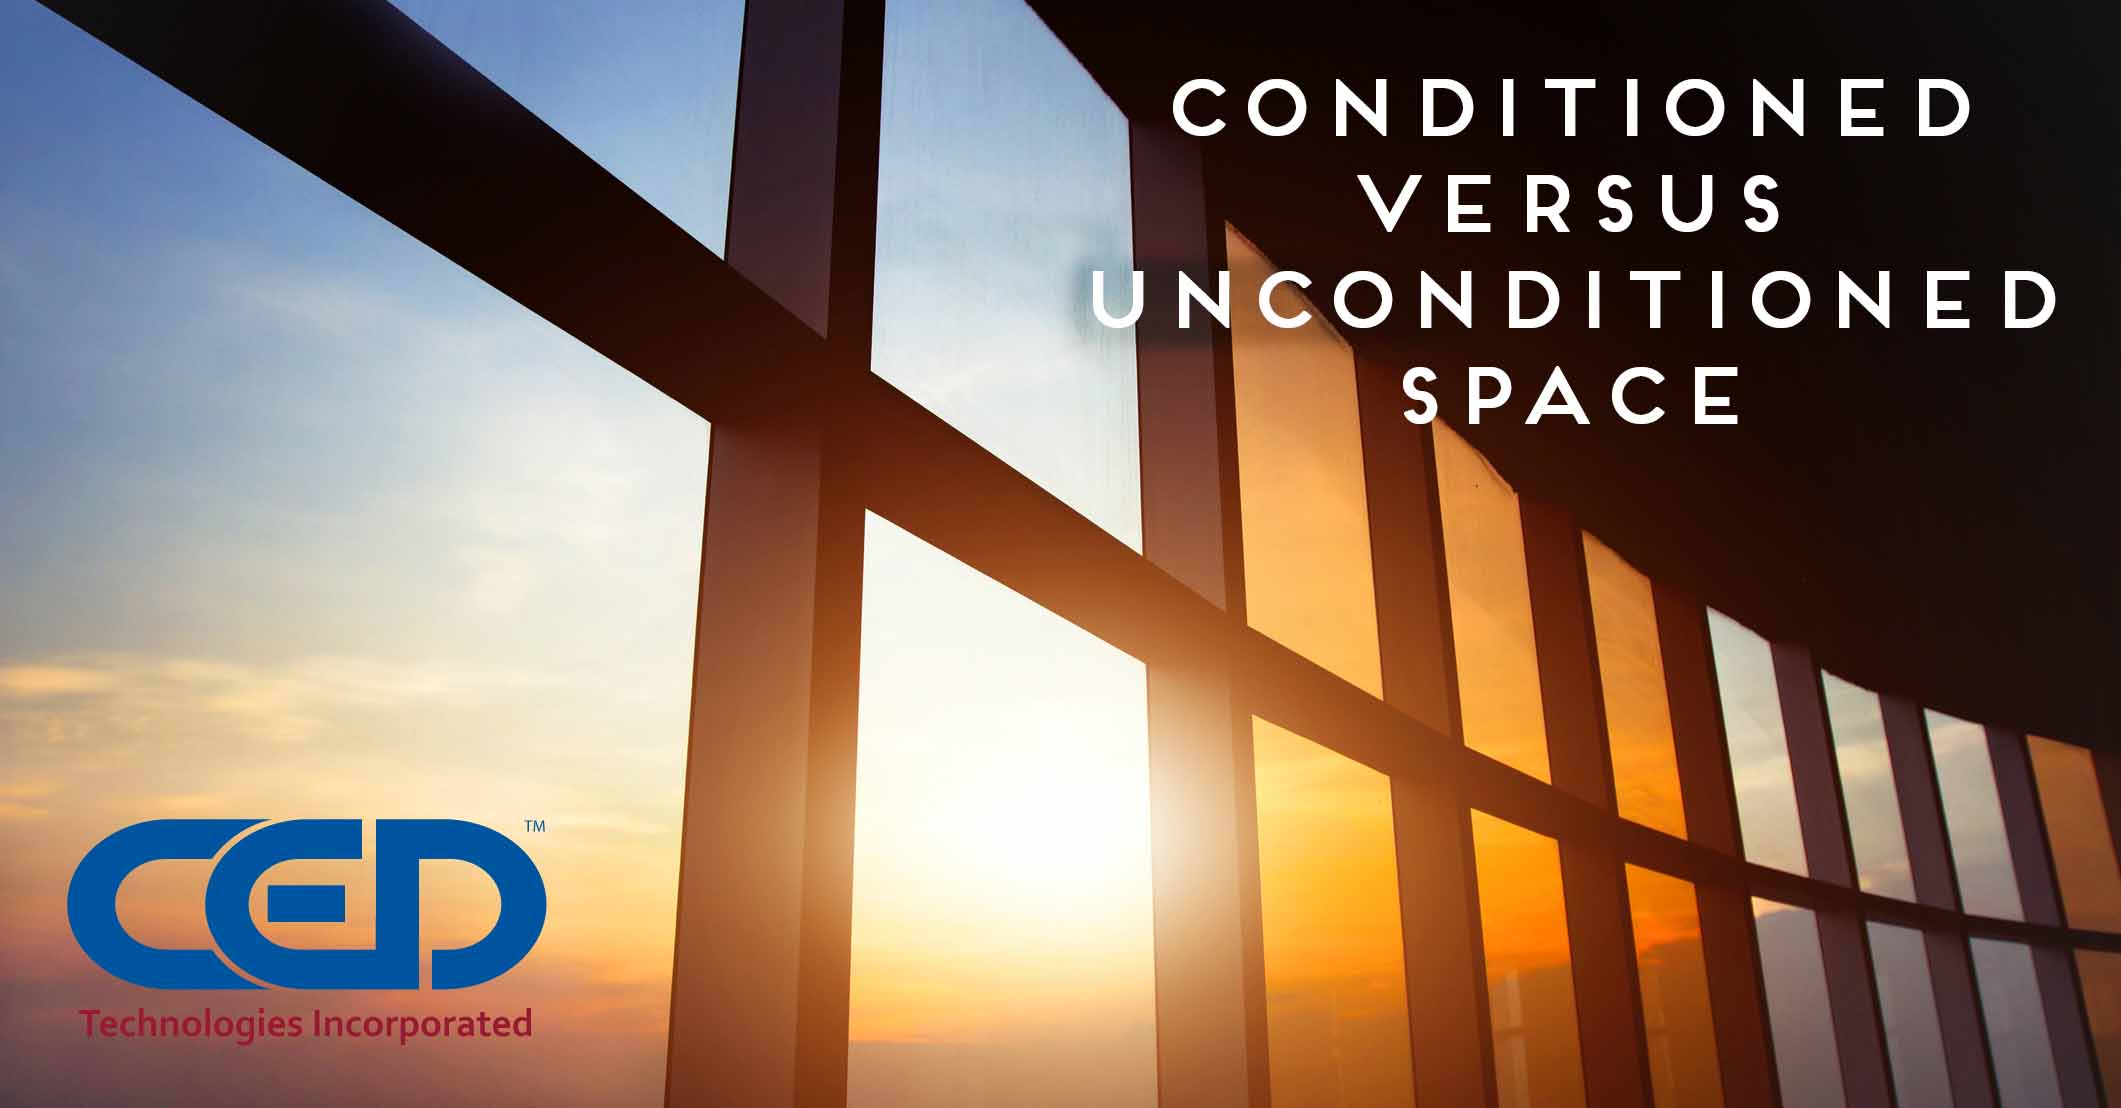 Conditioned versus Unconditioned Space